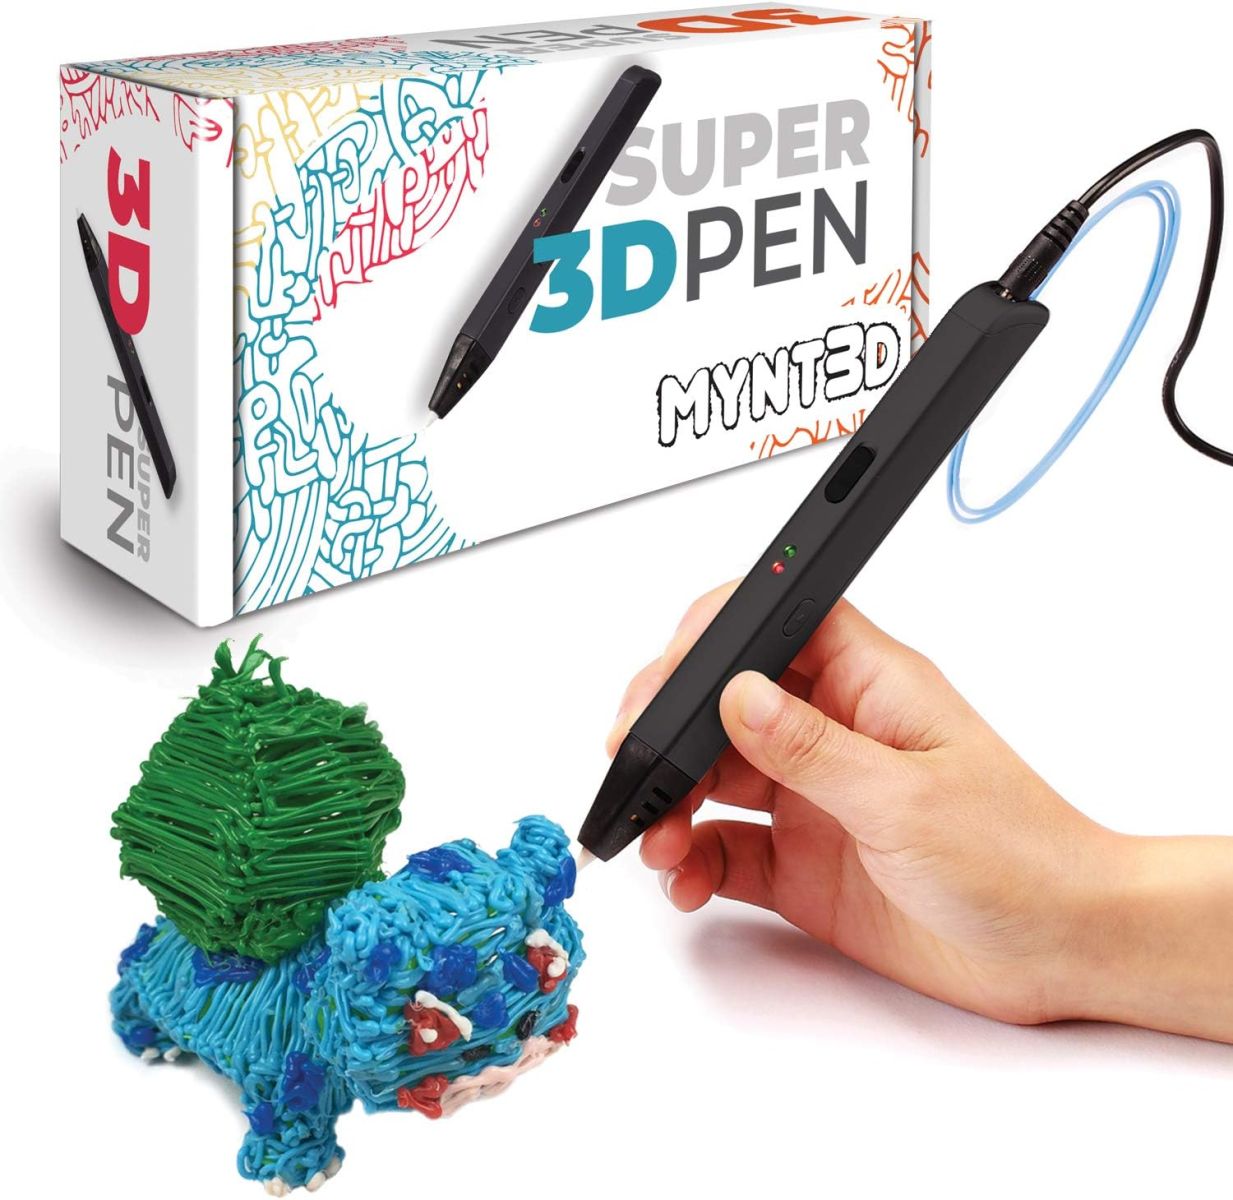 Super 3D Pen, 1.75mm ABS and PLA Compatible 3D Printing Pen